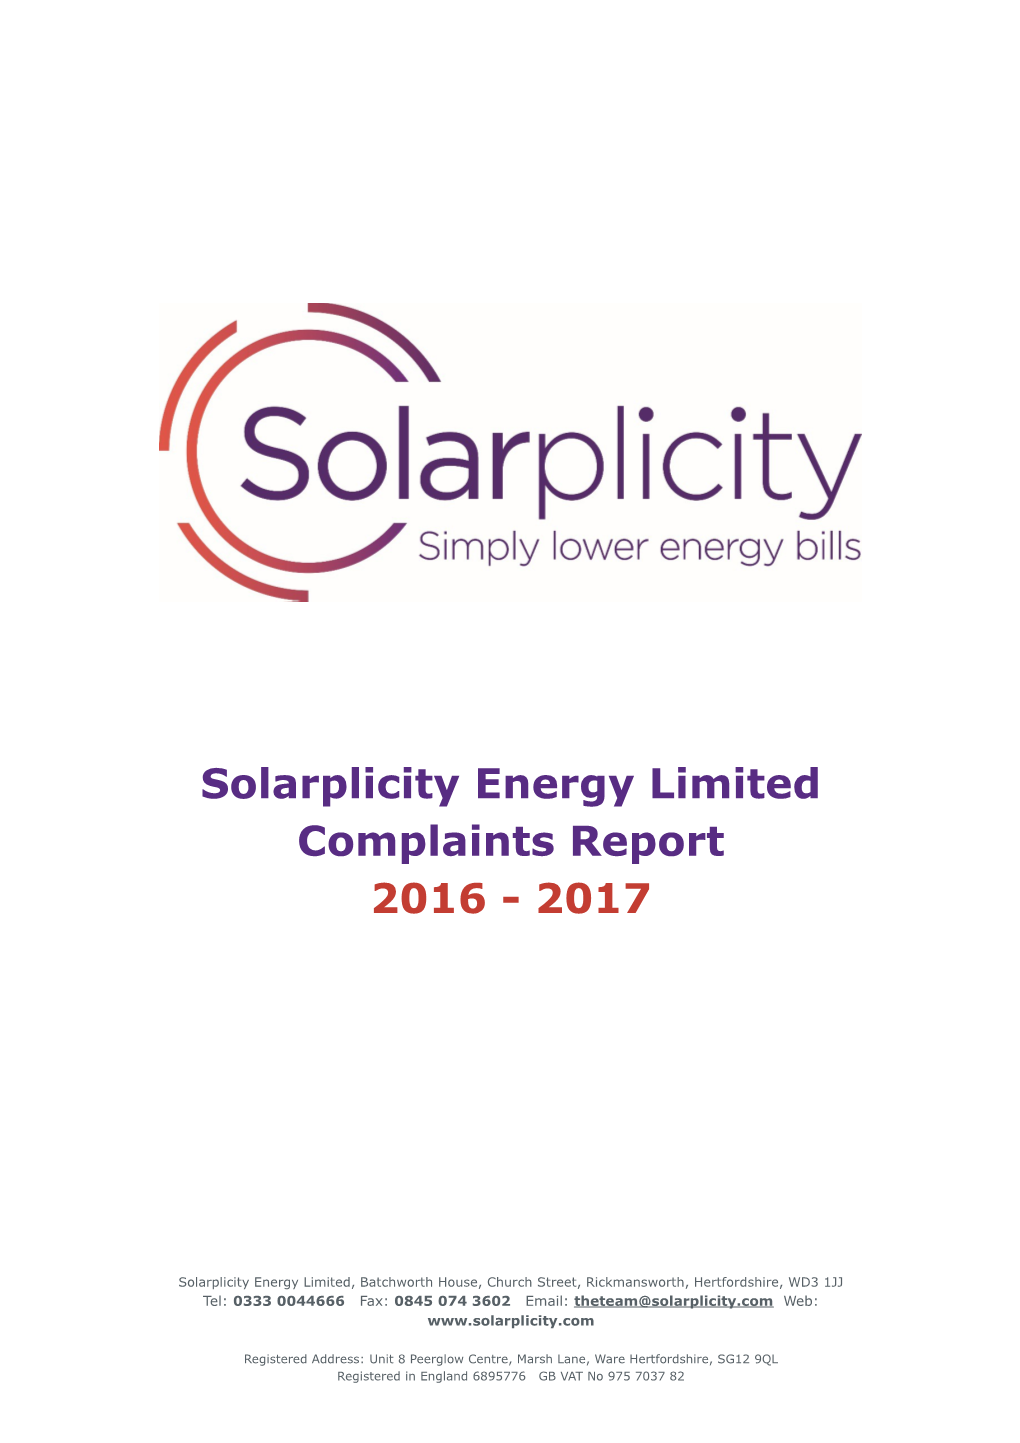 Solarplicity Energy Limited Complaints Report 2016/17